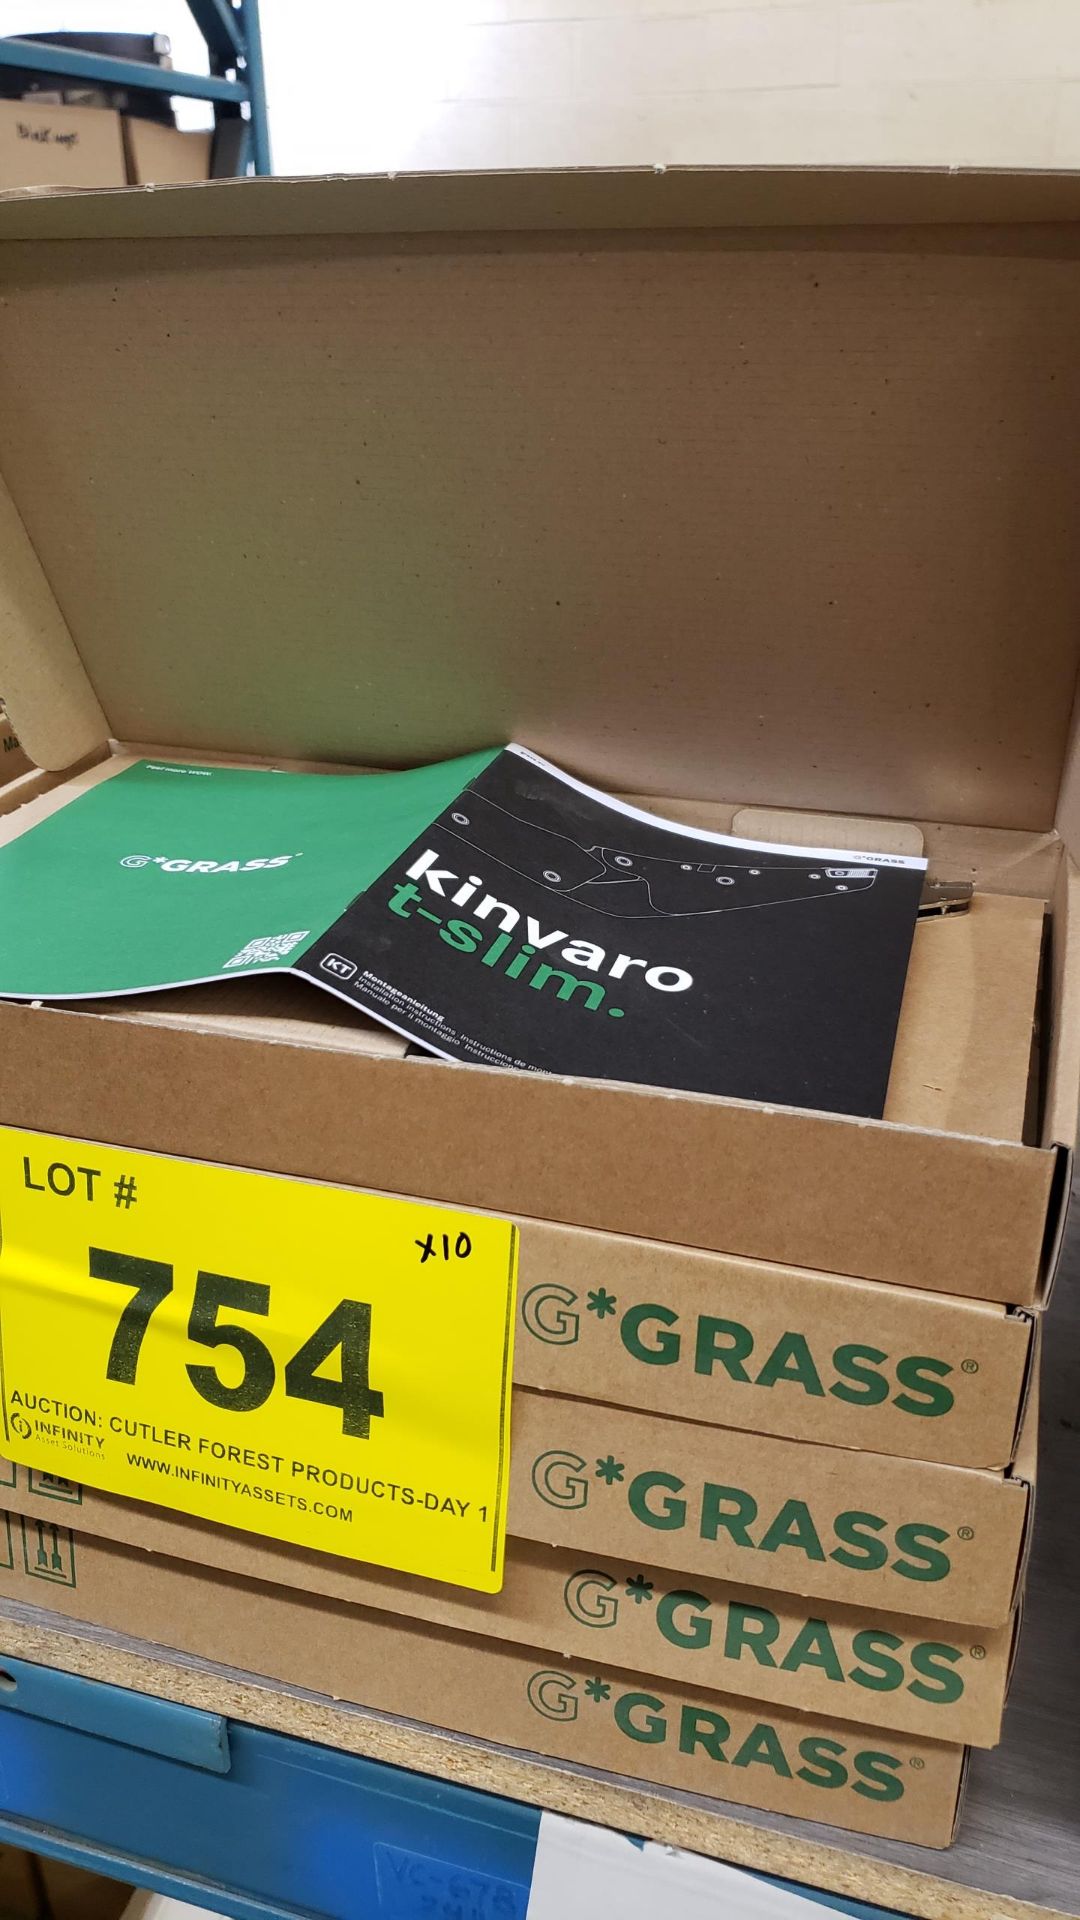 BOXES OF GRASS KINVARO T SLIM S, SET WOOD PF1000-2250, SOFT-CLOSE, ICE HARDWARE (SUBJECT TO BULK BID